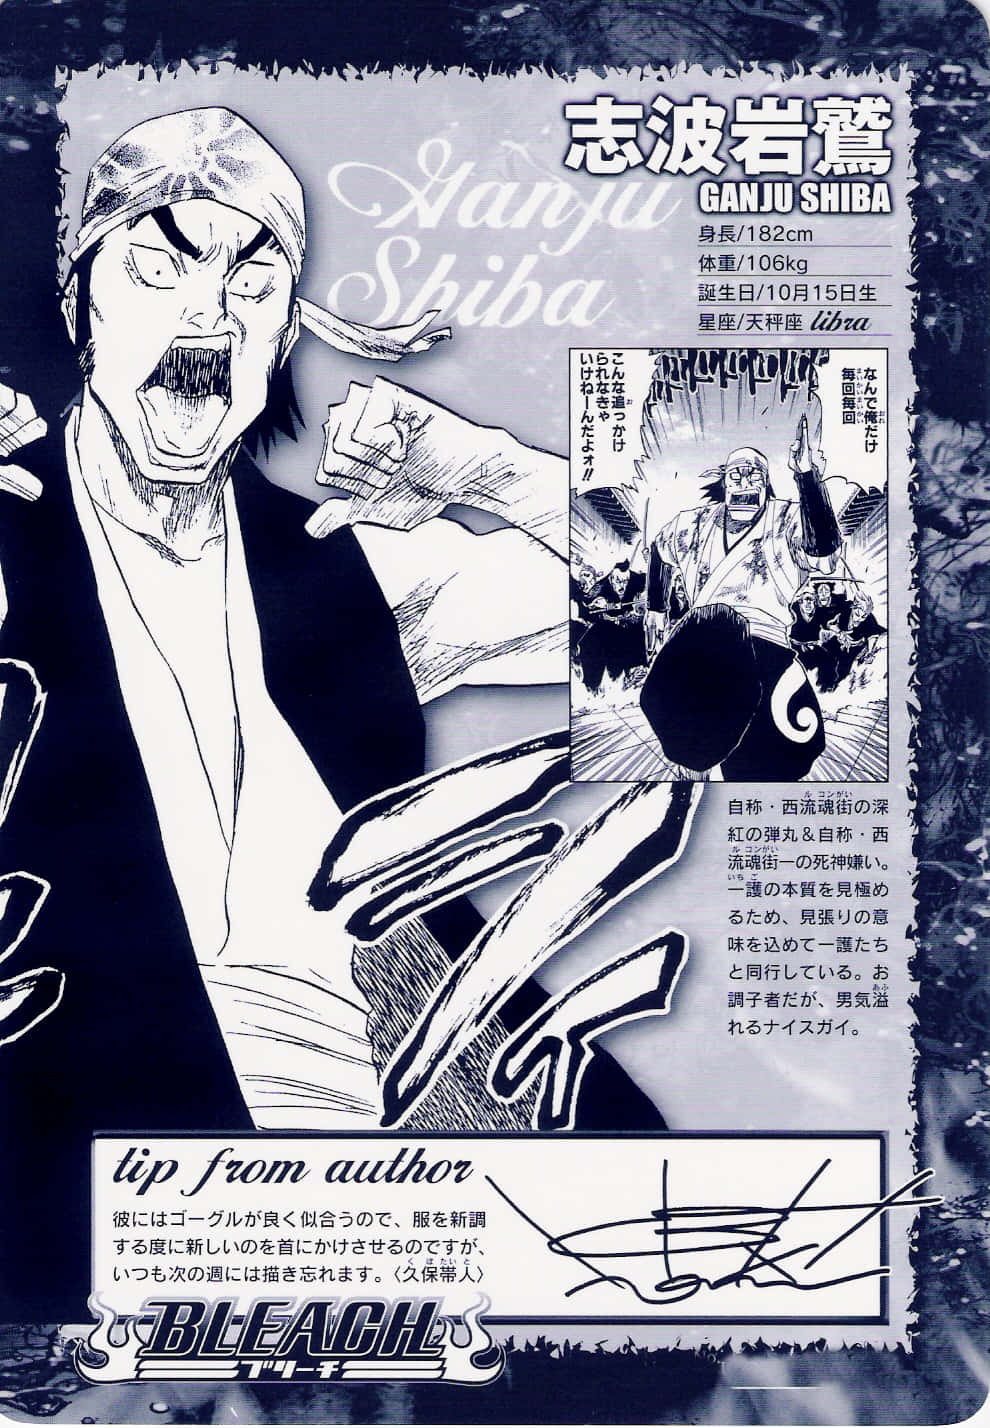 Ganju Shiba - Soul Reaper from the Bleach anime series Wallpaper